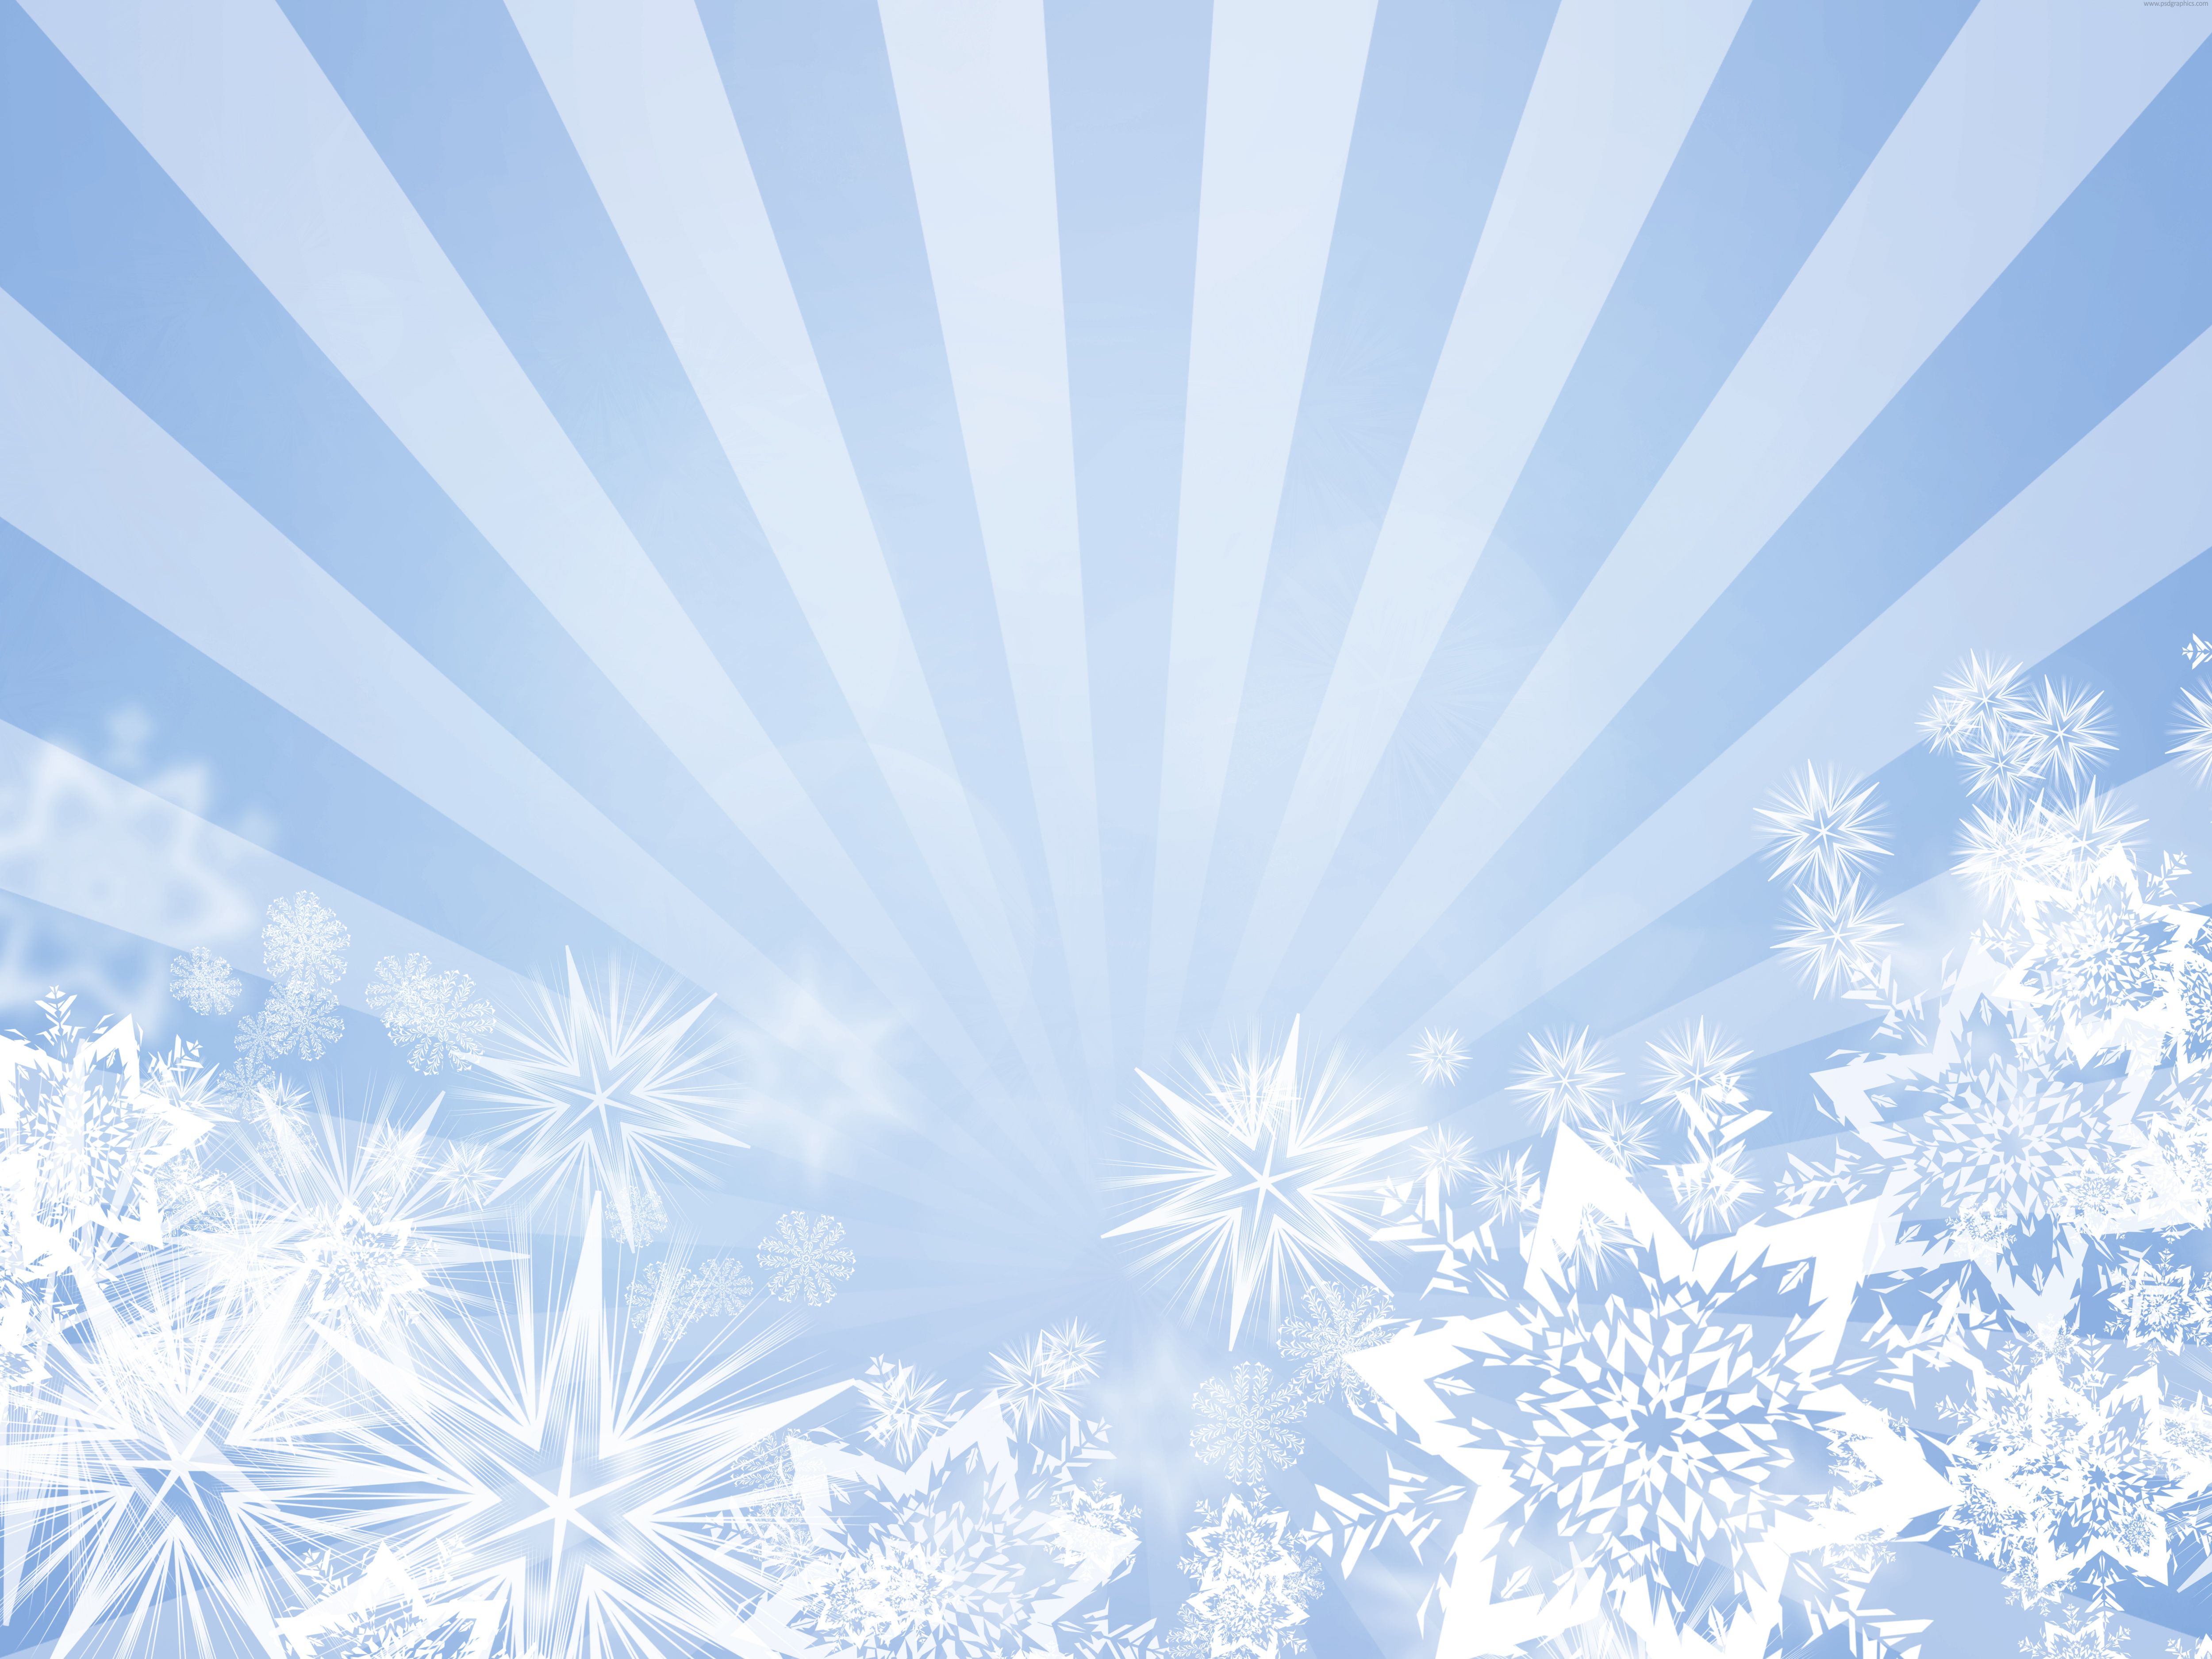 Light blue snowflakes design